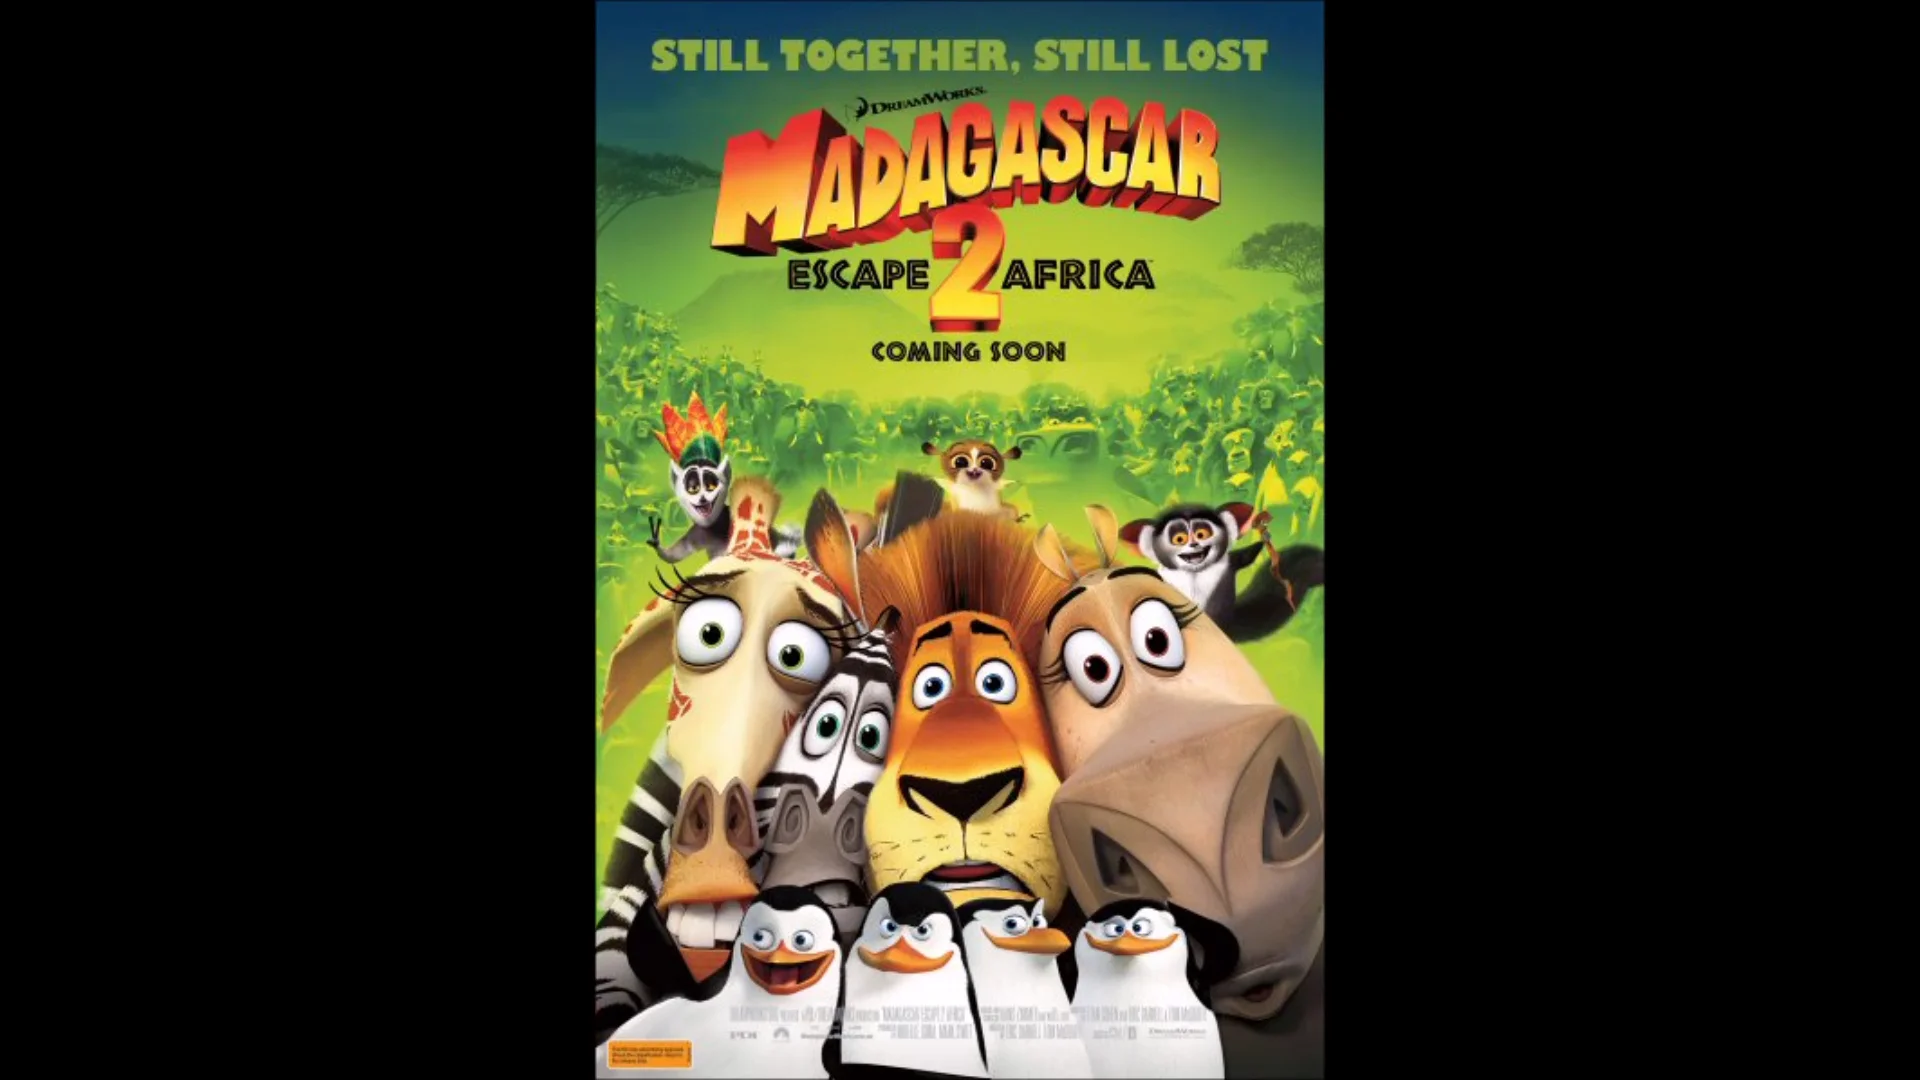 Включи i like to move it мадагаскар. Мадагаскар 2 / Madagascar: Escape 2 Africa (2008). I like to move it move it Мадагаскар. I like to move Мадагаскар. Мадагаскар 2 Африка.